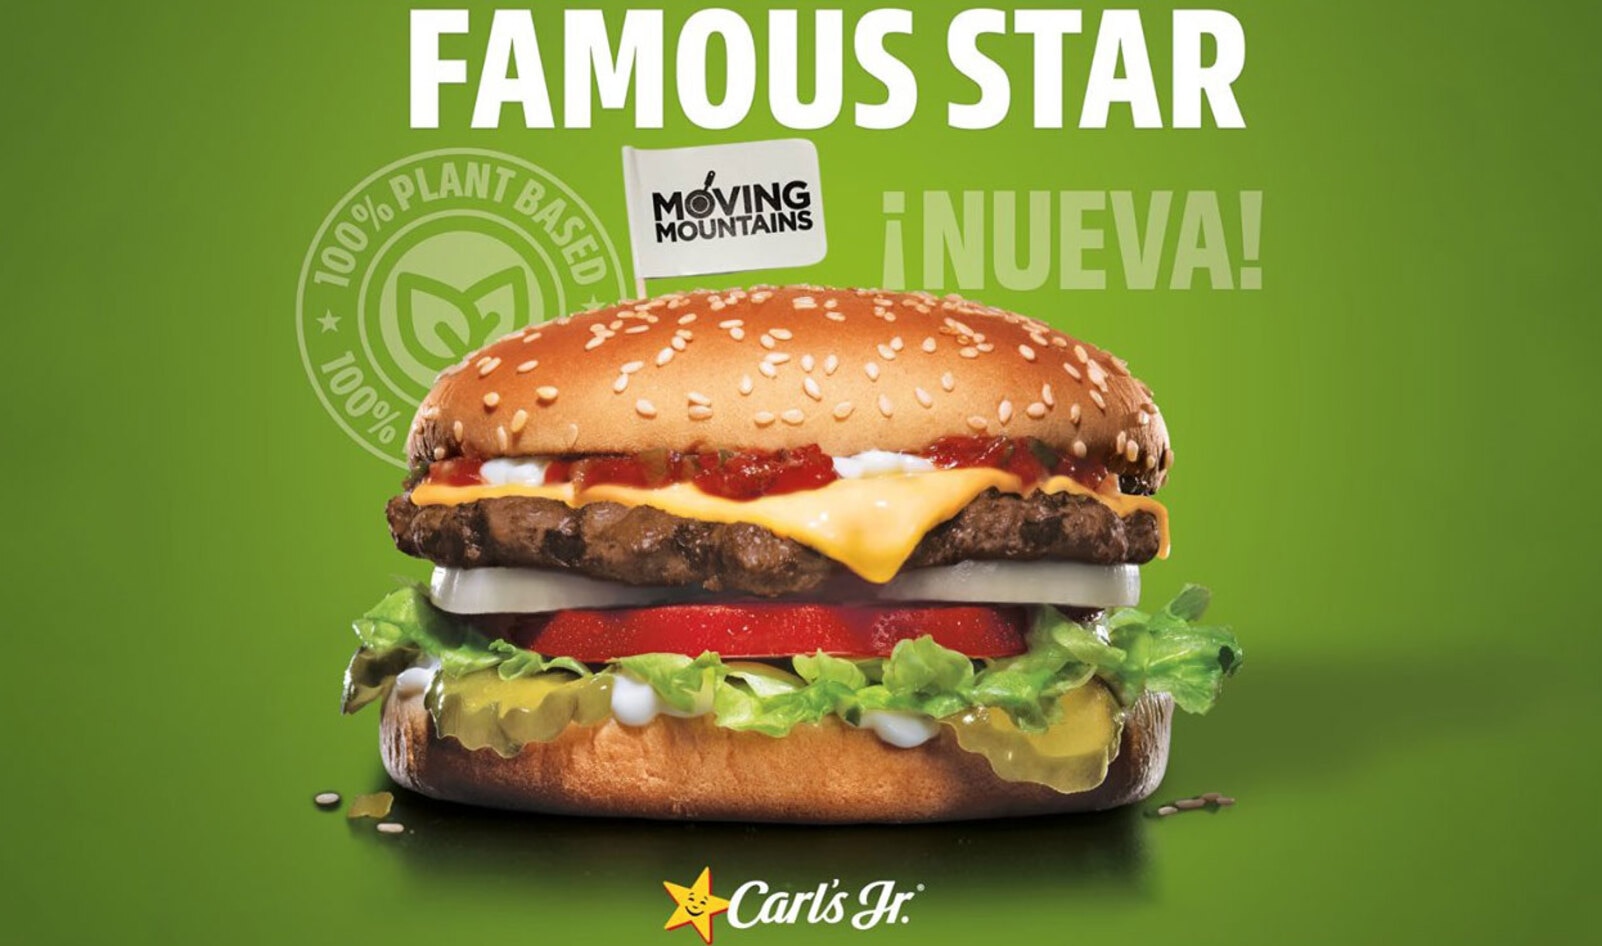 Carl’s Jr. Debuts Meatless Famous Star Burger in Spain